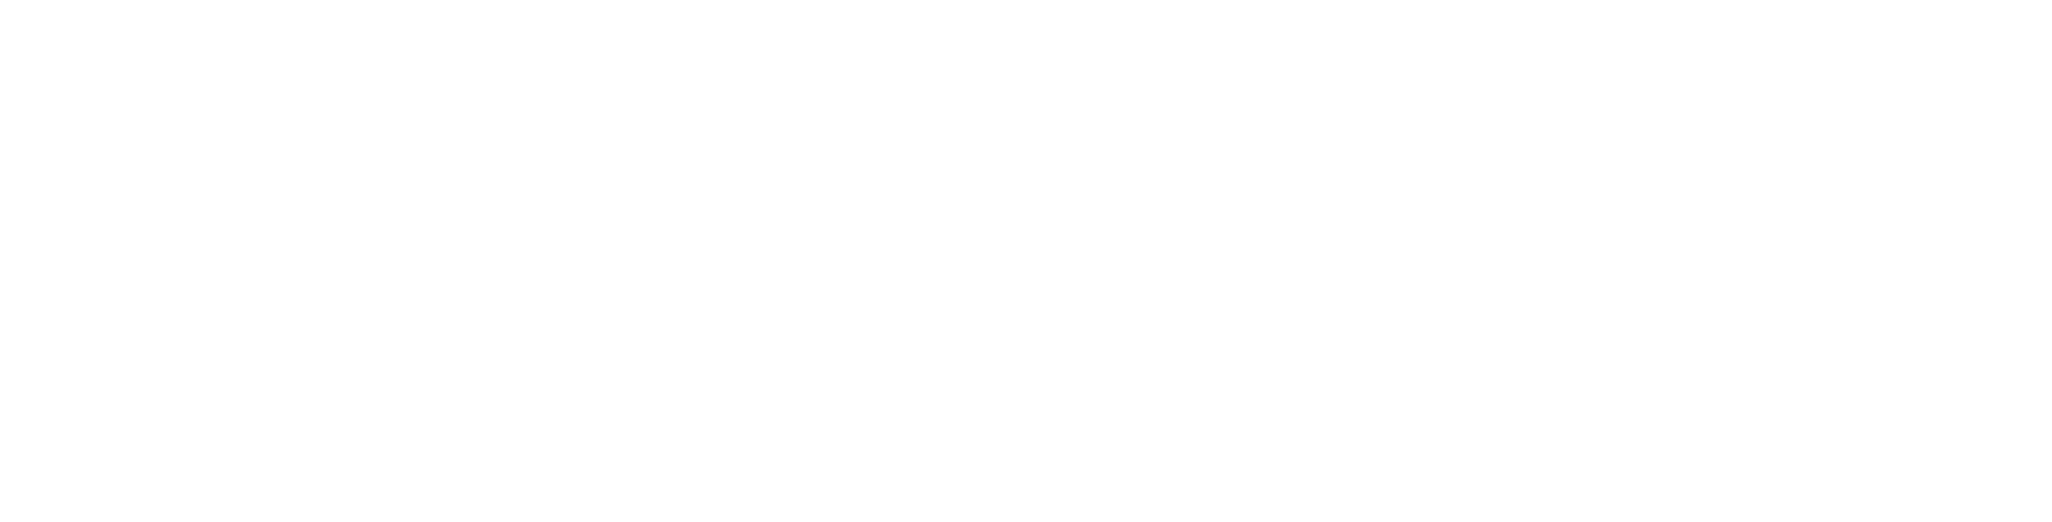 Dogwalkers Cannabis' Pre-rolls product logo